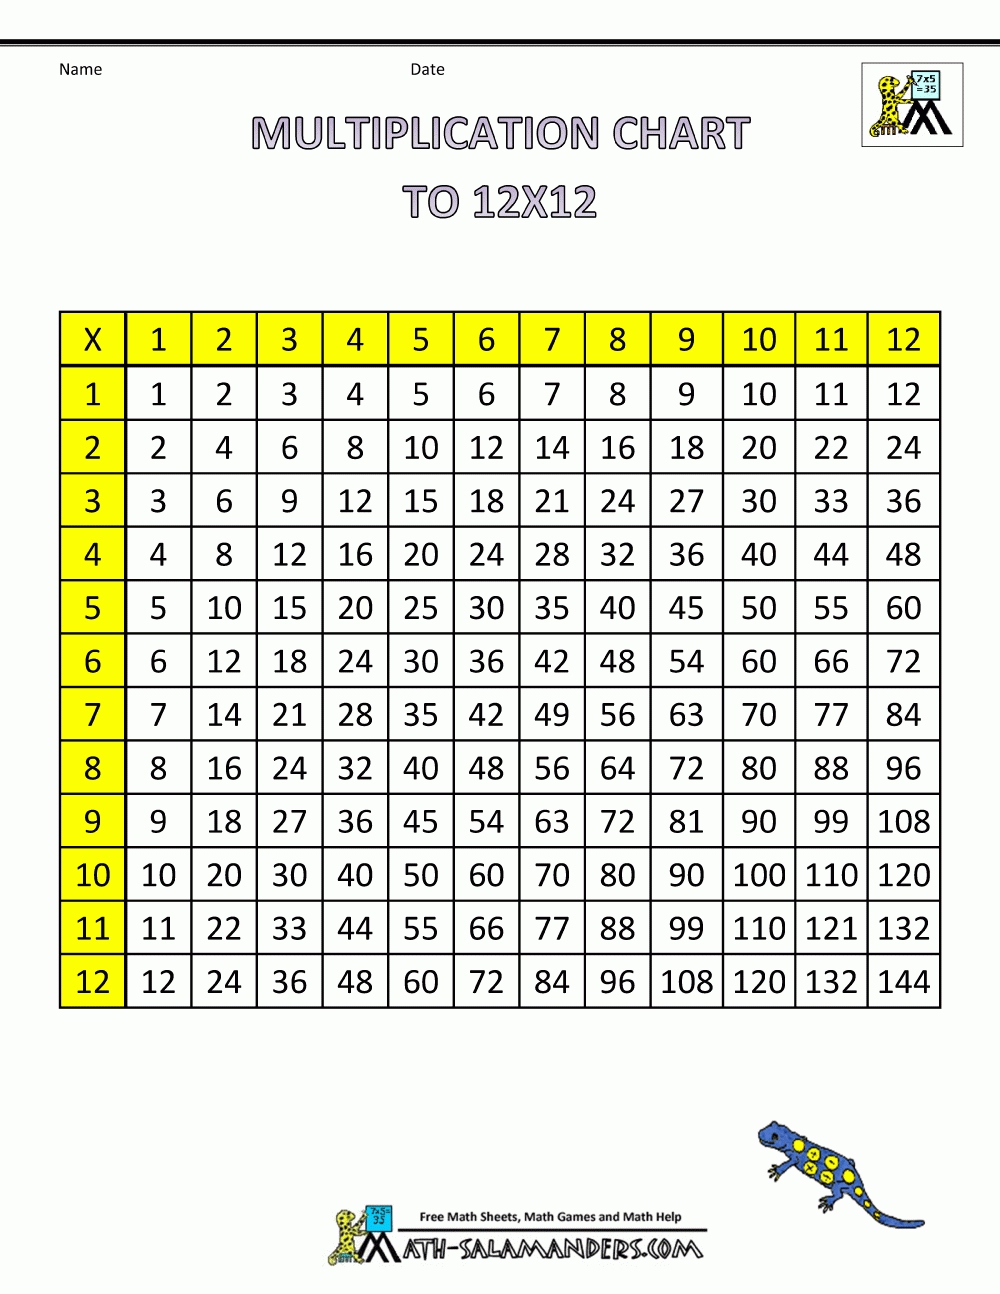 Multiplication chart 15x15 pdf - essentialsvamet